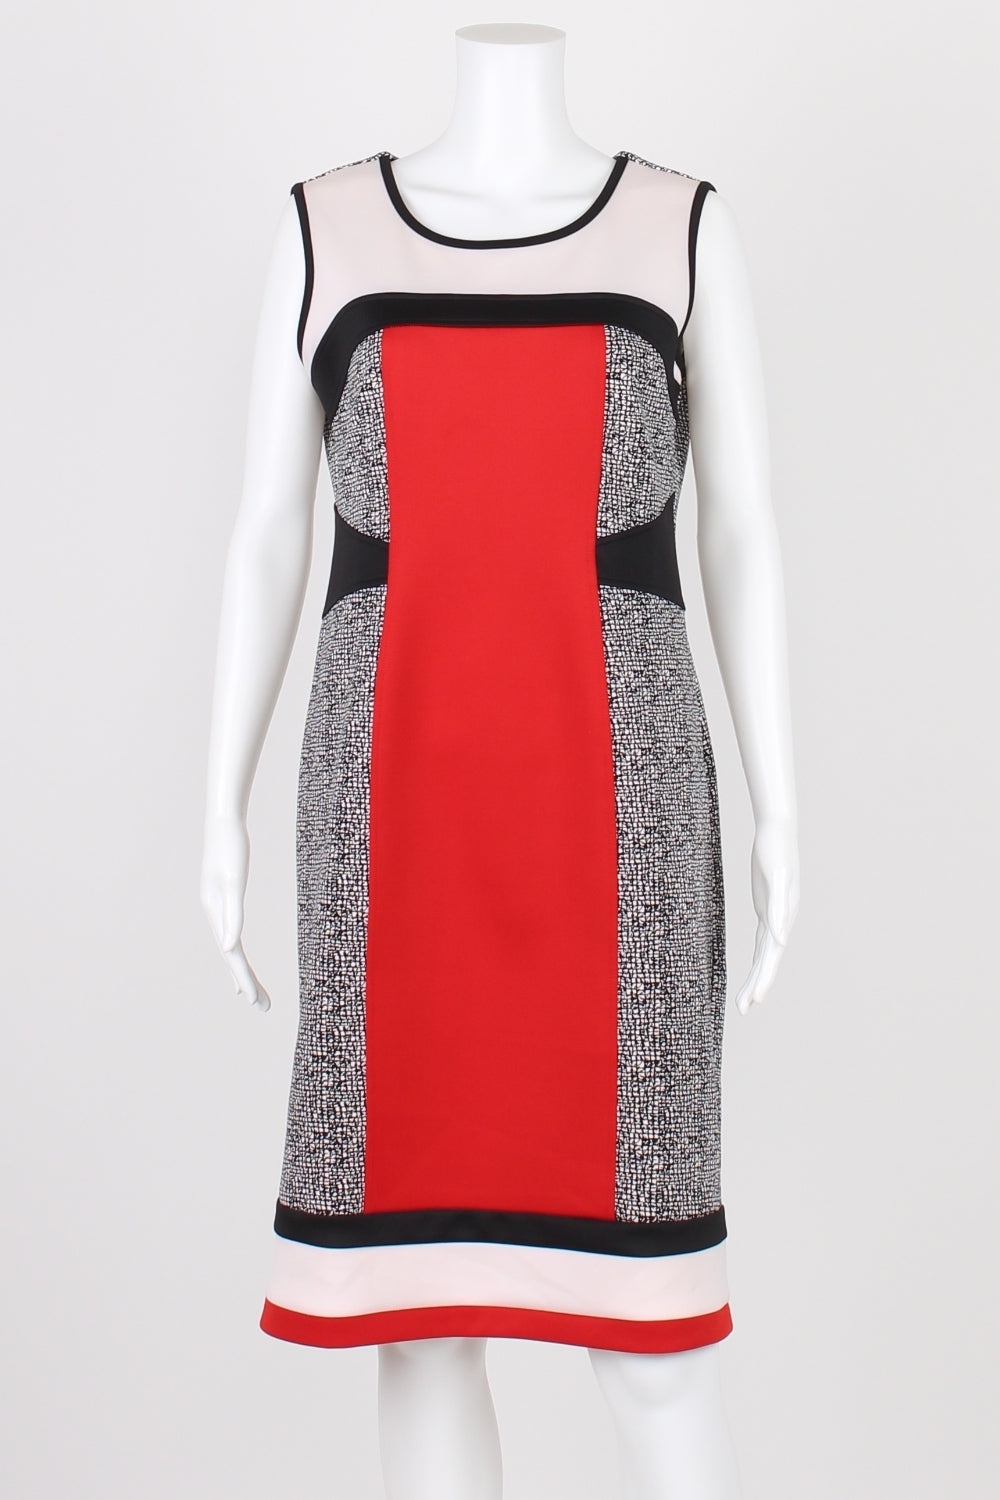 Liz Jordan Black, White and Red Sleeveless Dress 12